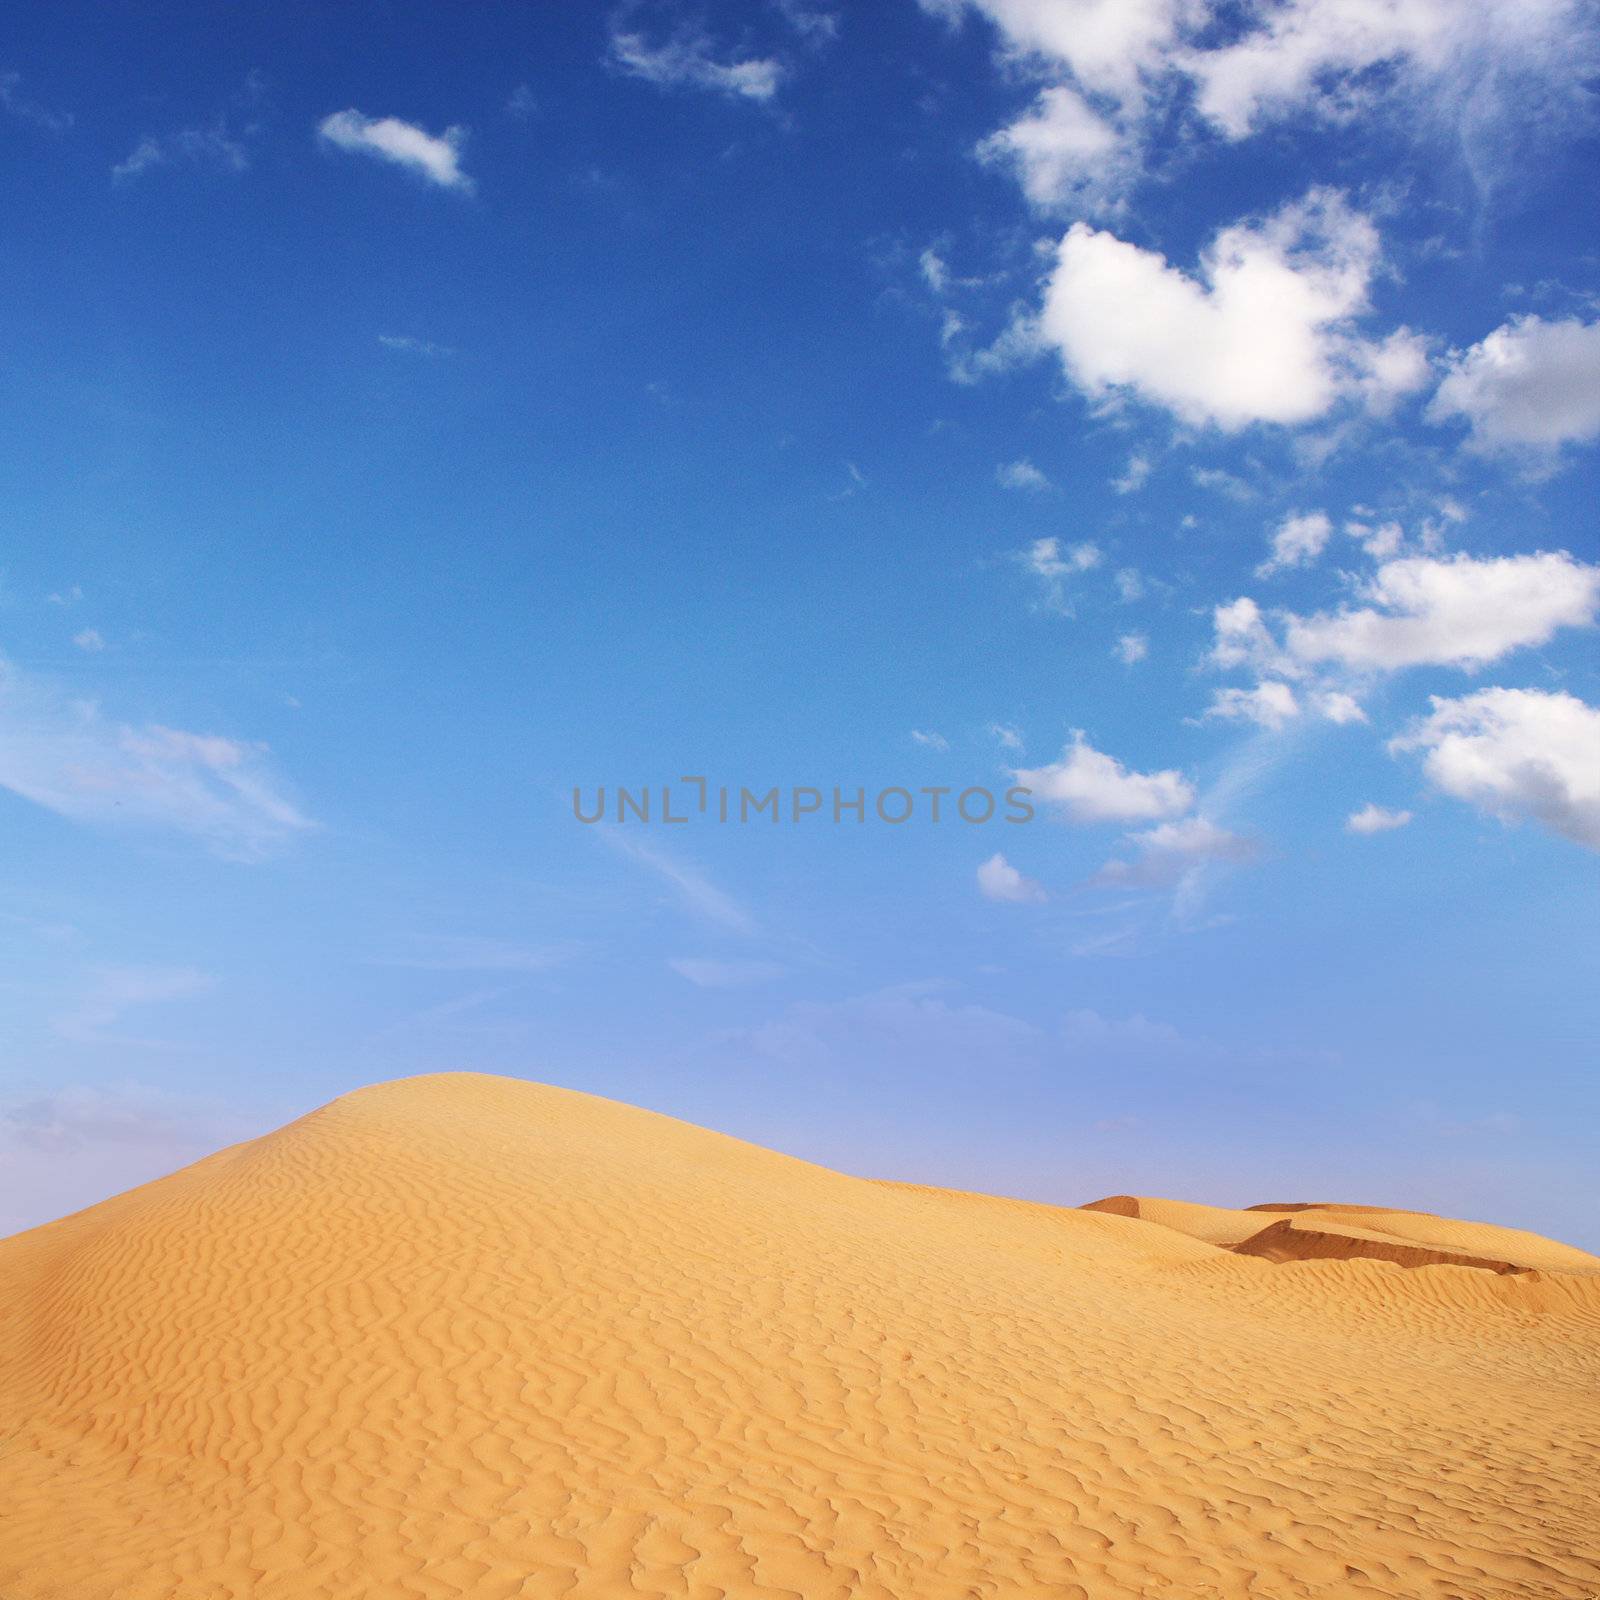 adventures in the desert by photochecker